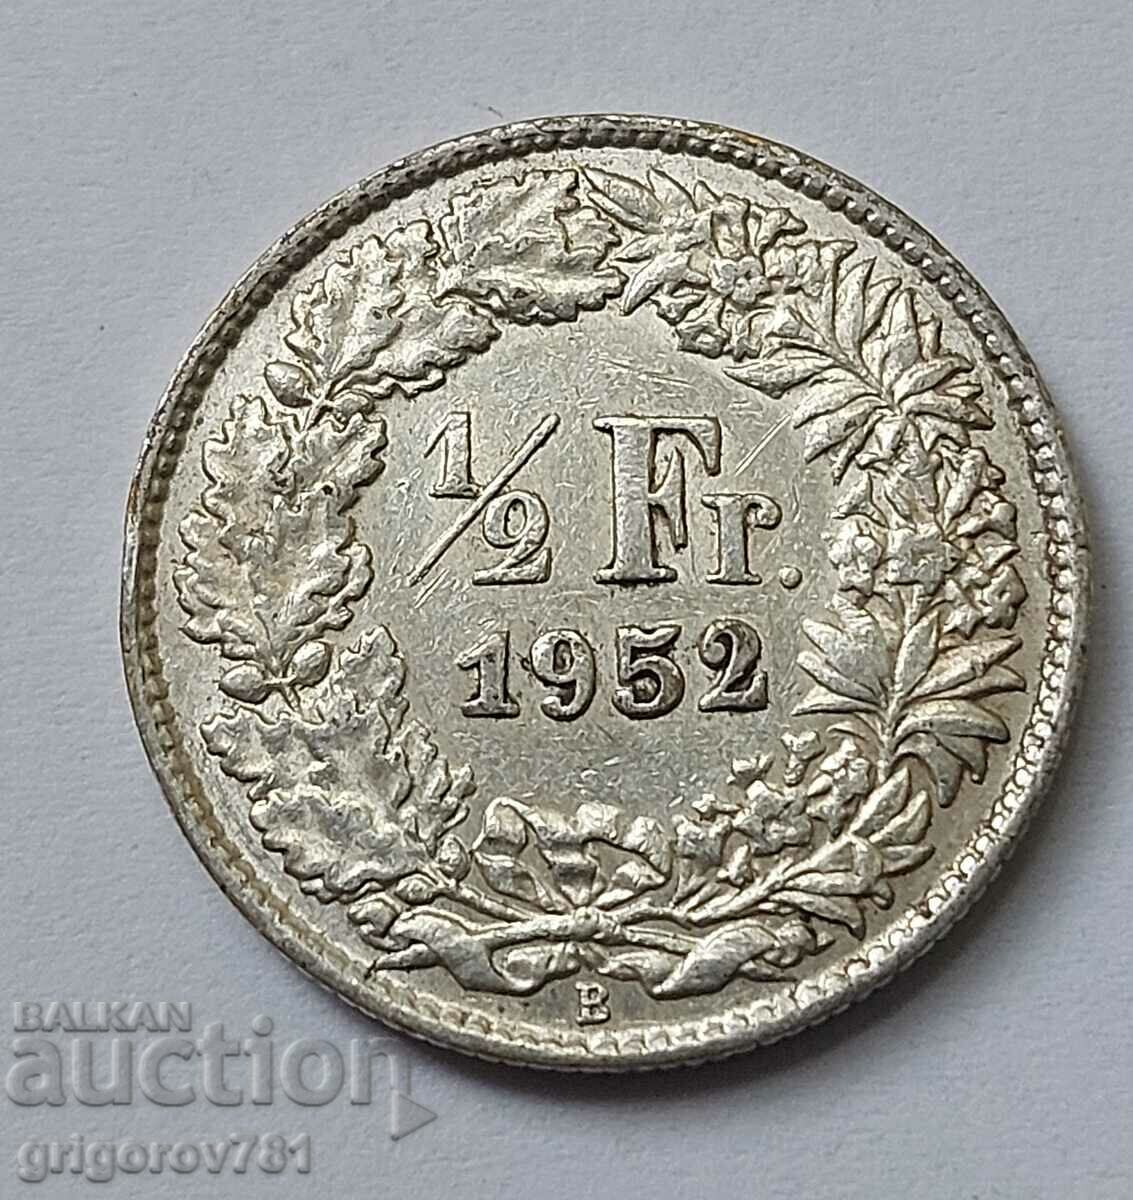 1/2 Franc Argint Elveția 1952 B - Monedă de argint #165